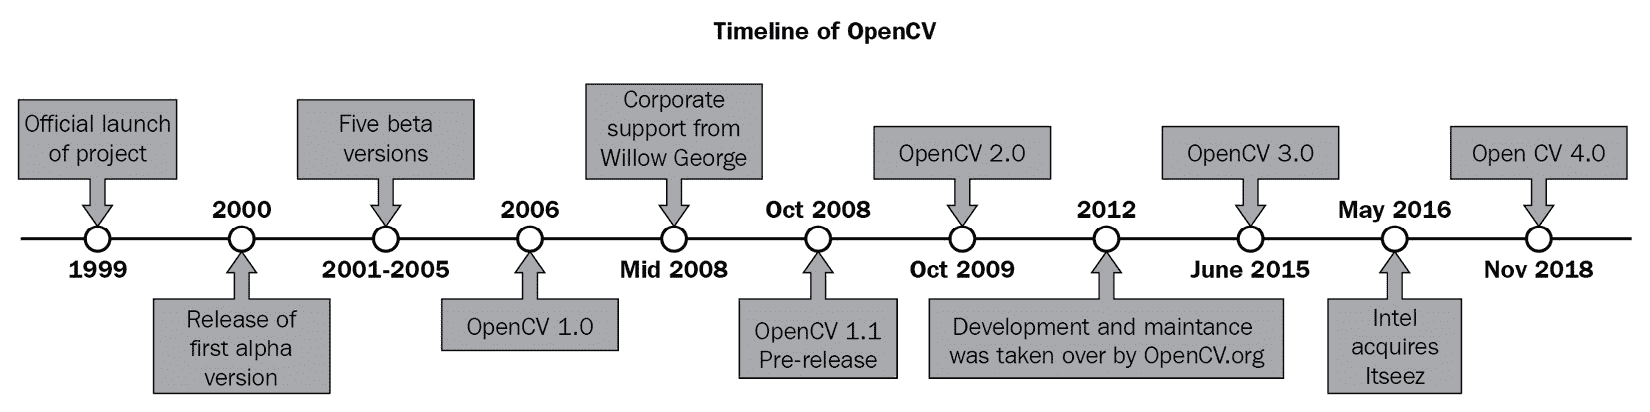 Figure 2: Timeline of OpenCV 